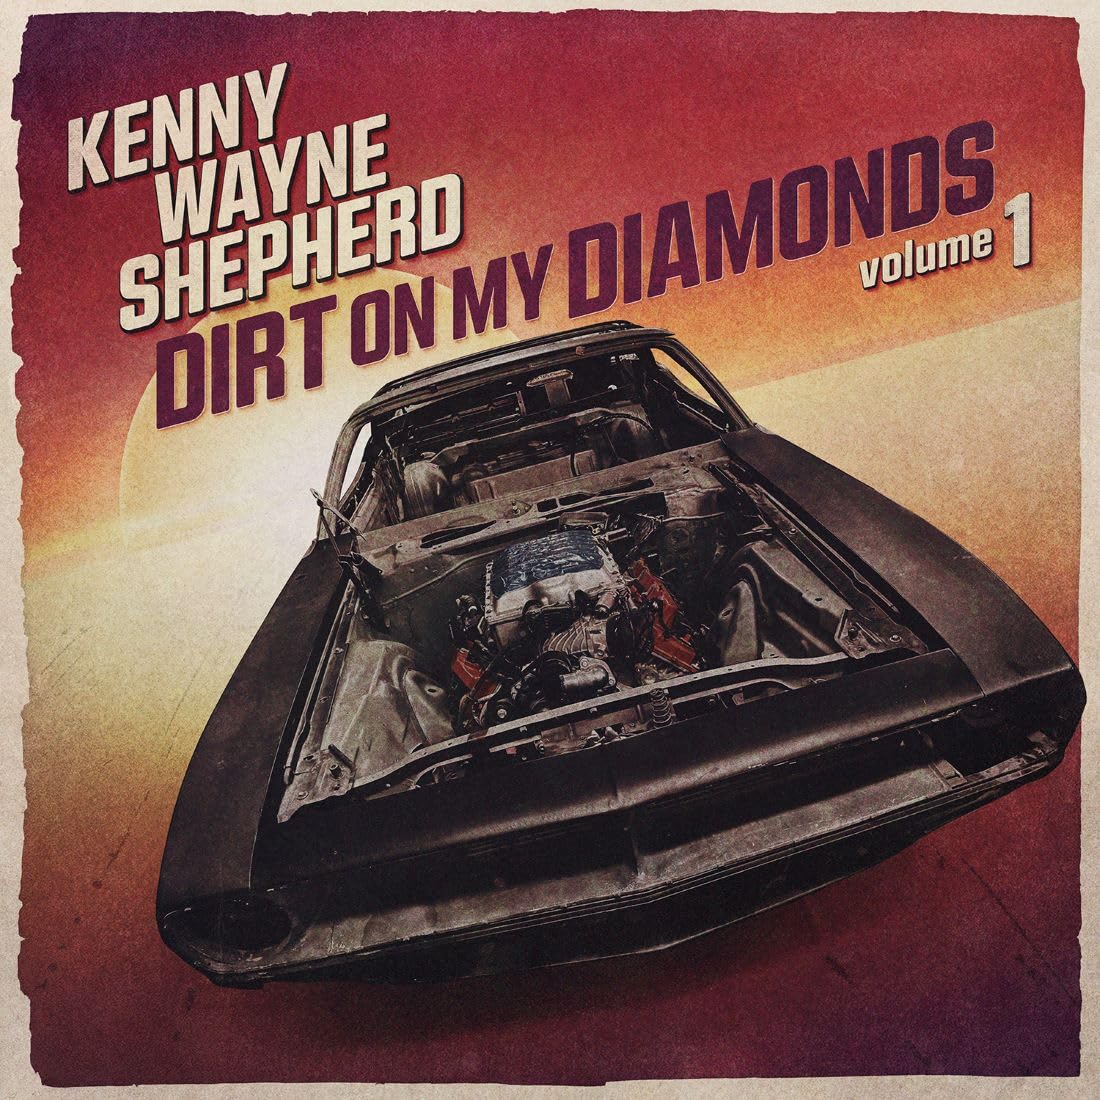 Kenny Wayne Shepherd - Dirt On My Diamonds Album Cover